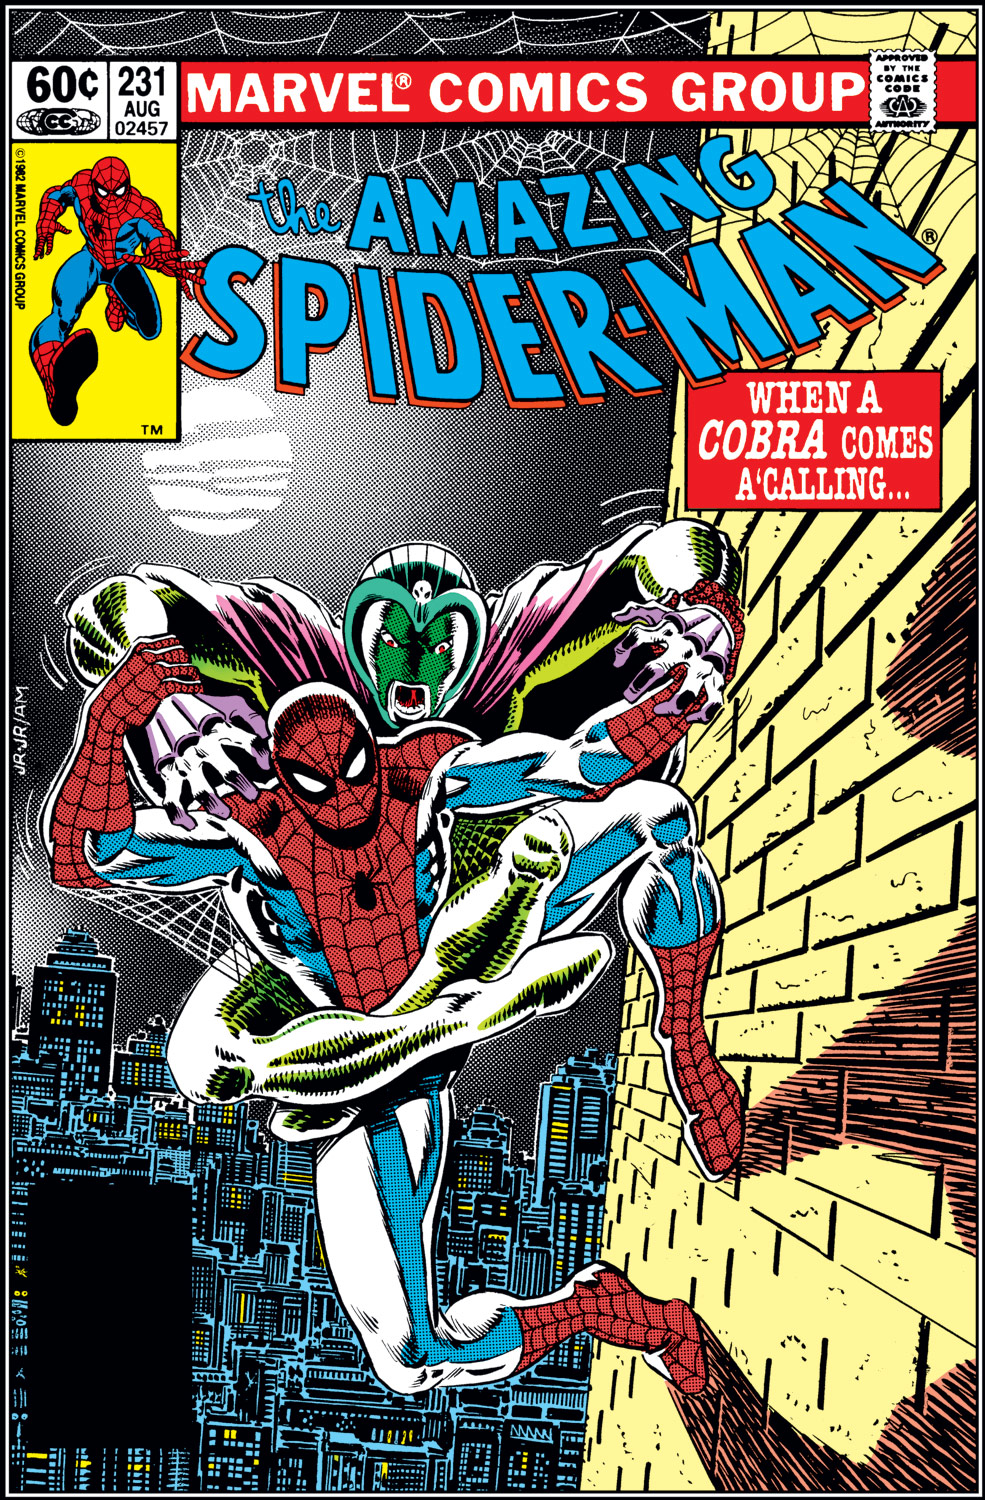 The Amazing Spider-Man (1963) #231